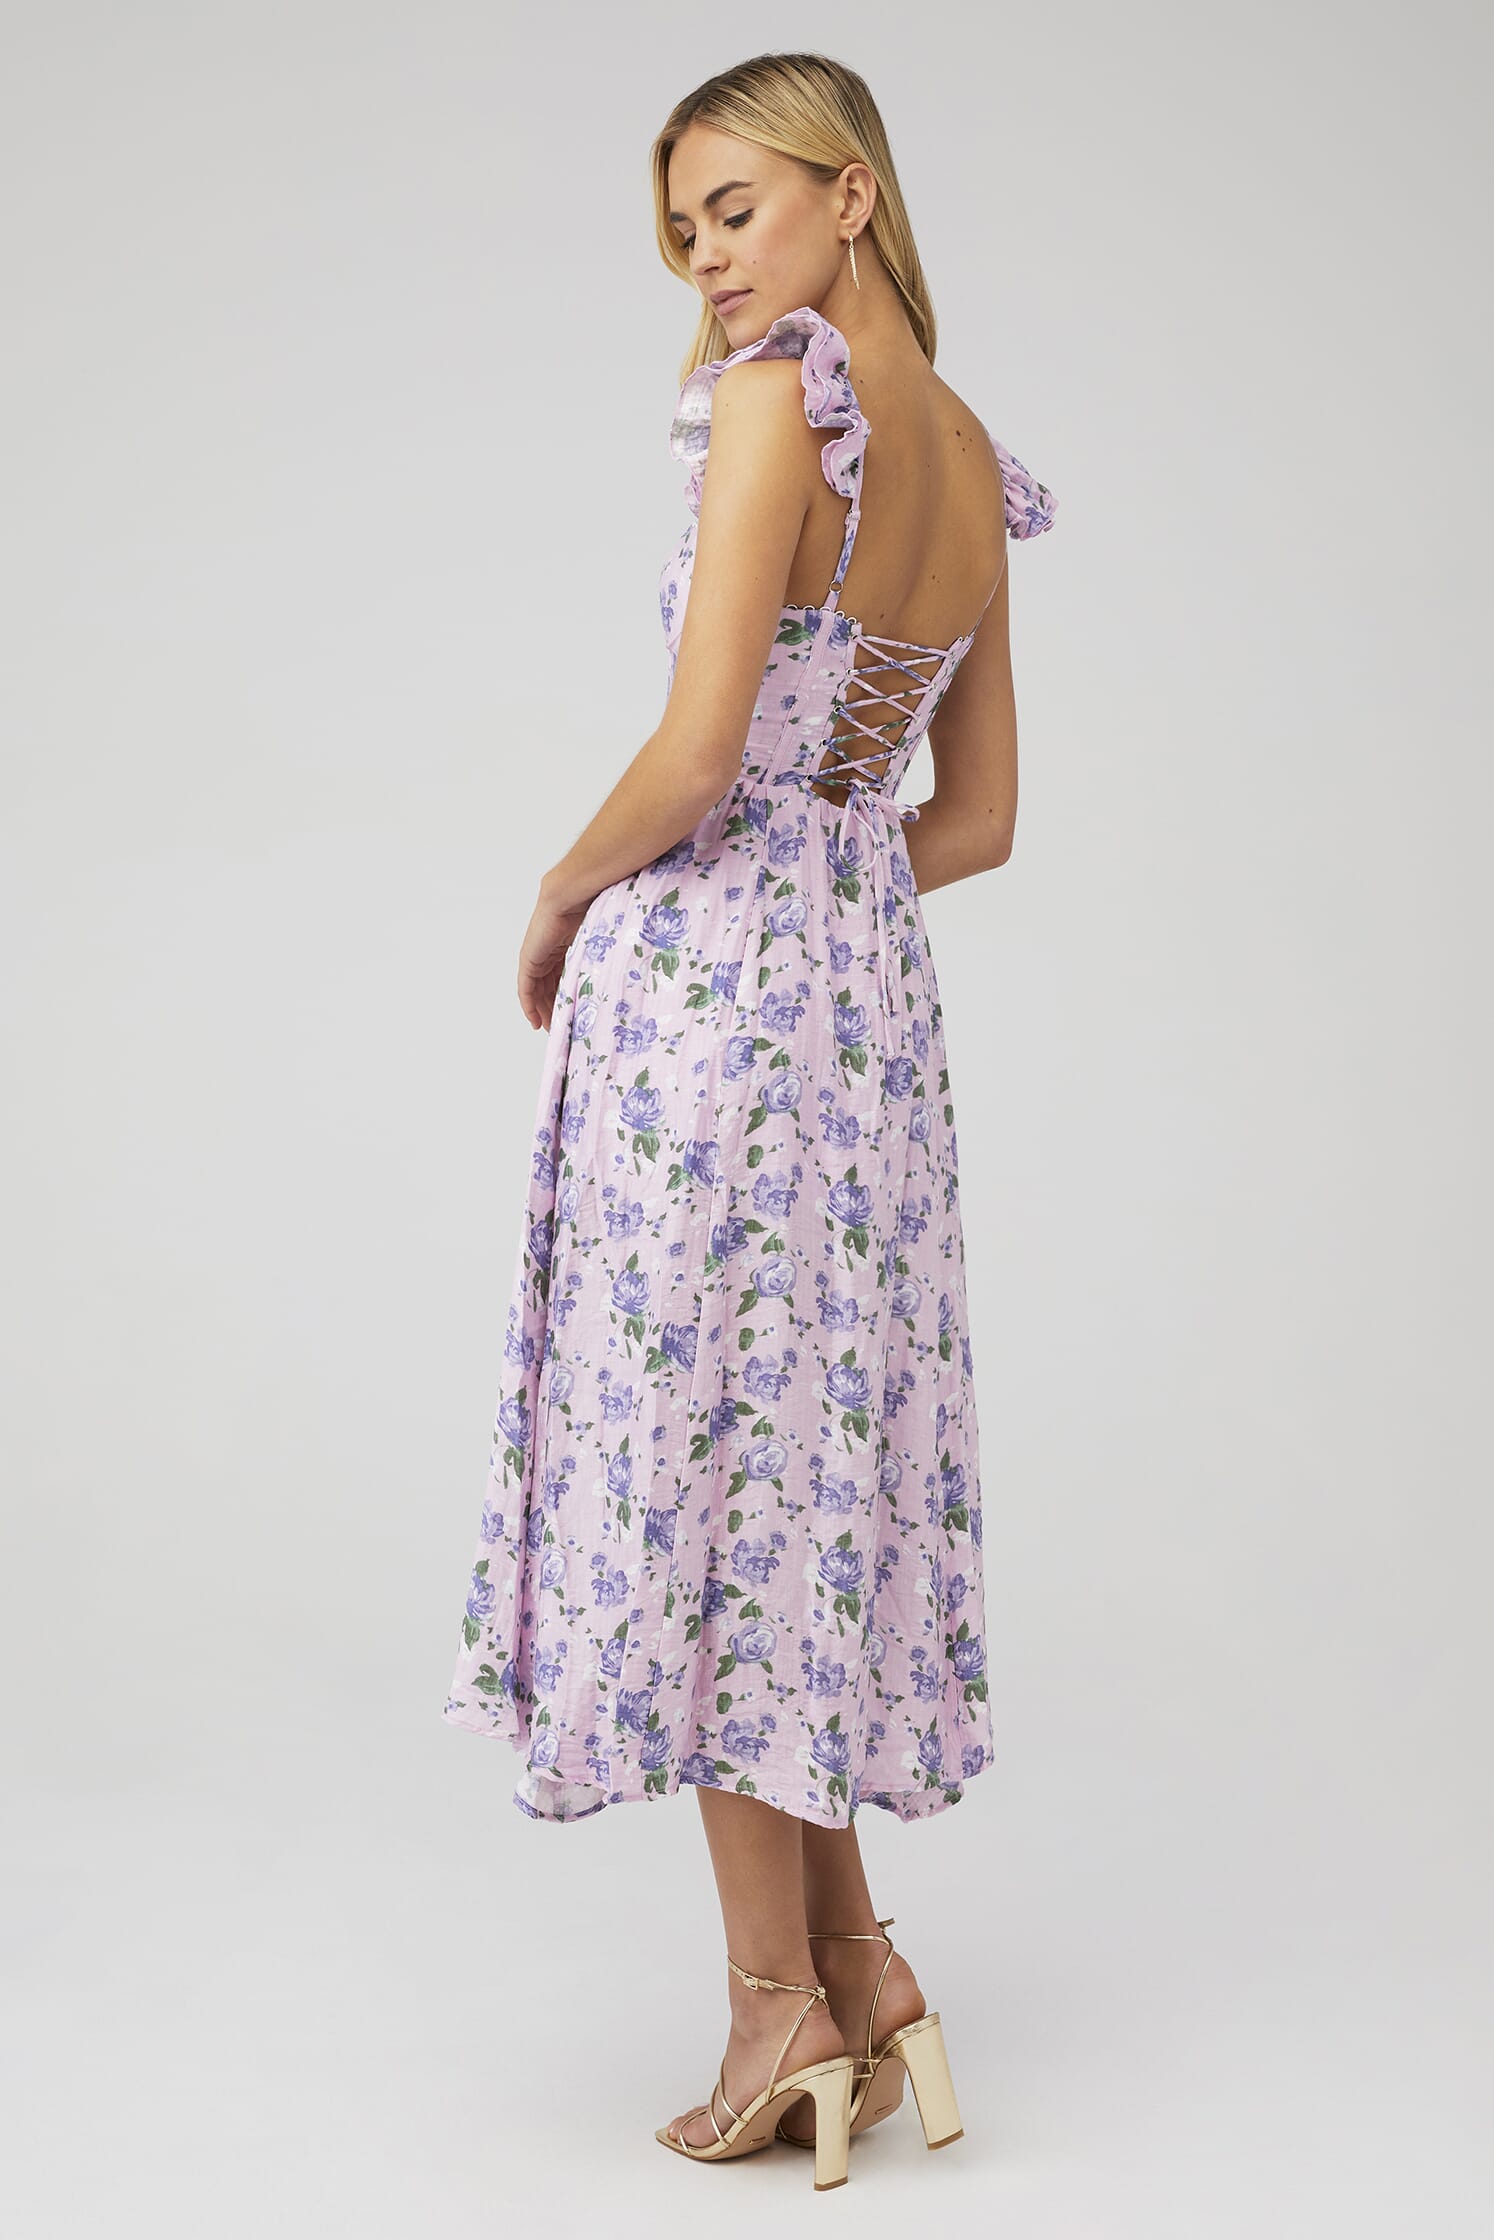 ASTR | Wedelia Dress in Purple Floral| FashionPass